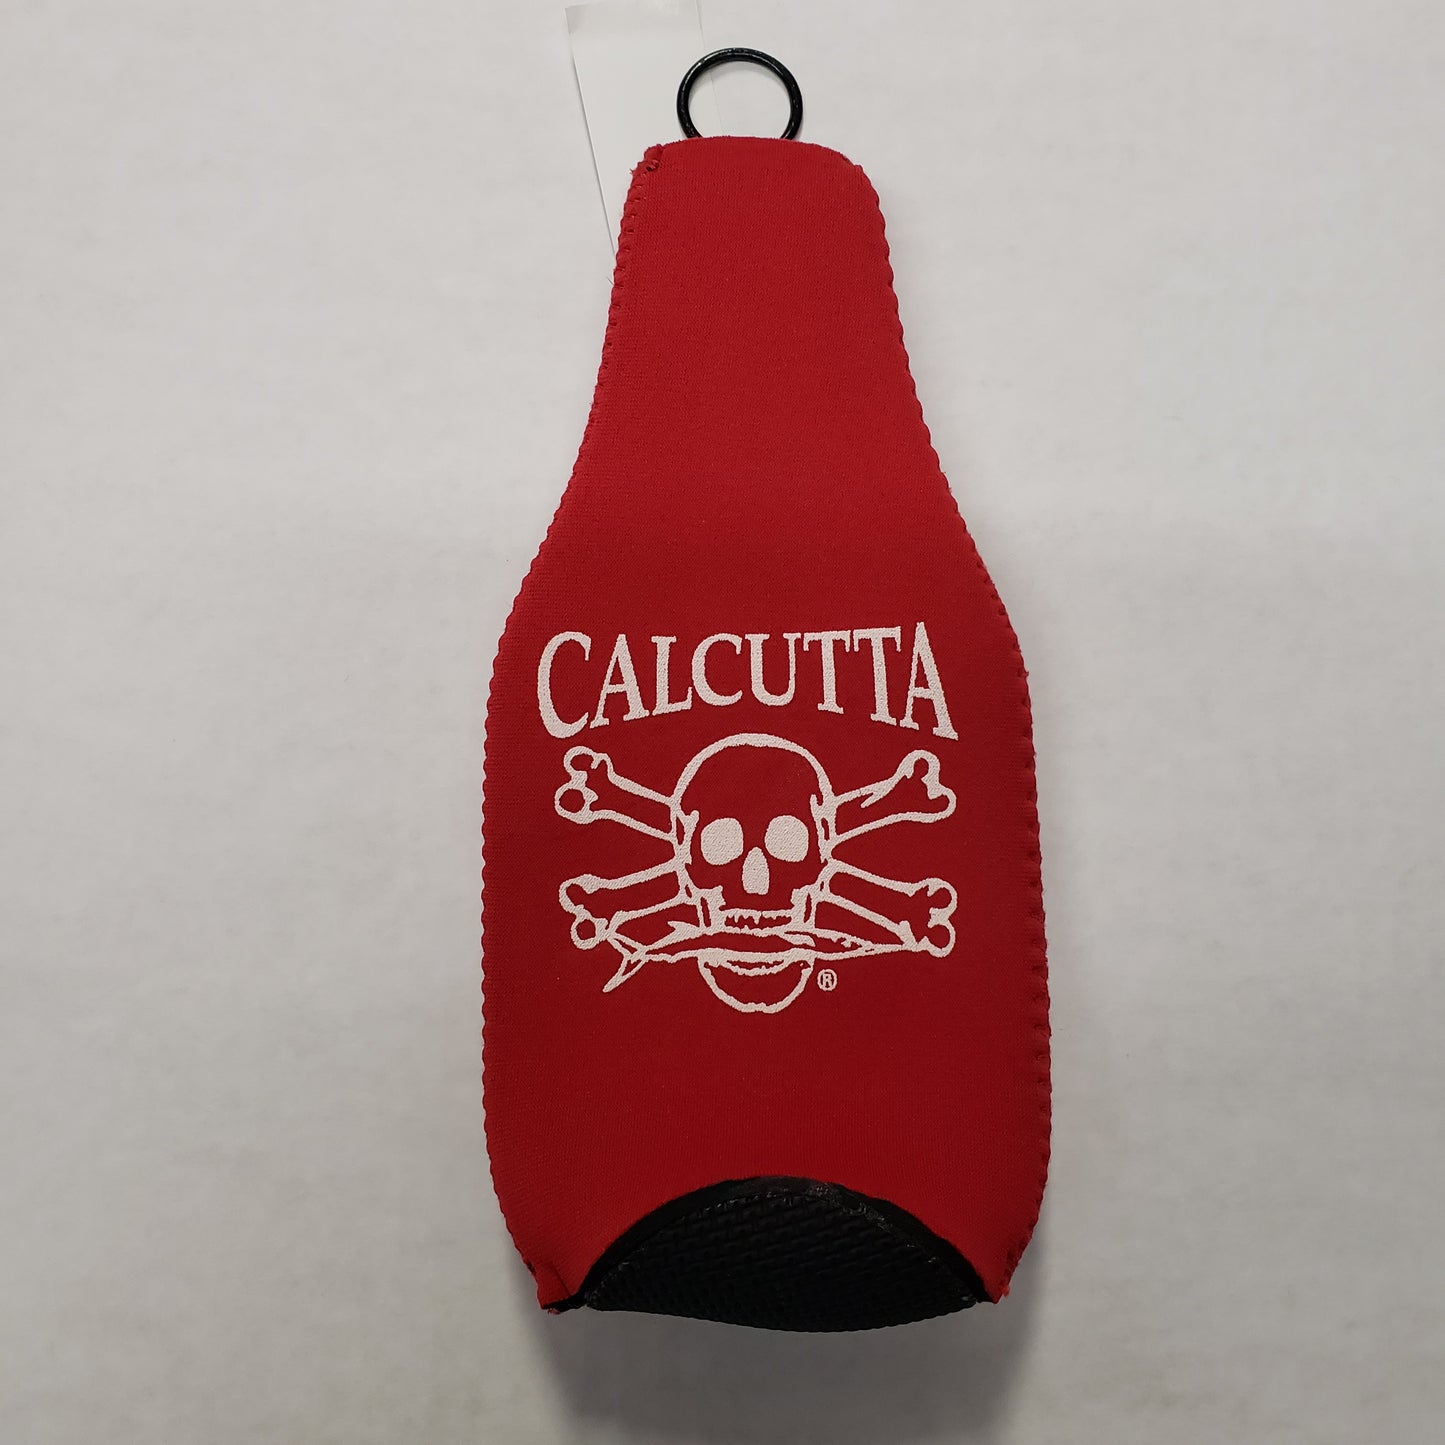 New Authentic Calcutta Bottle Cooler Koozie